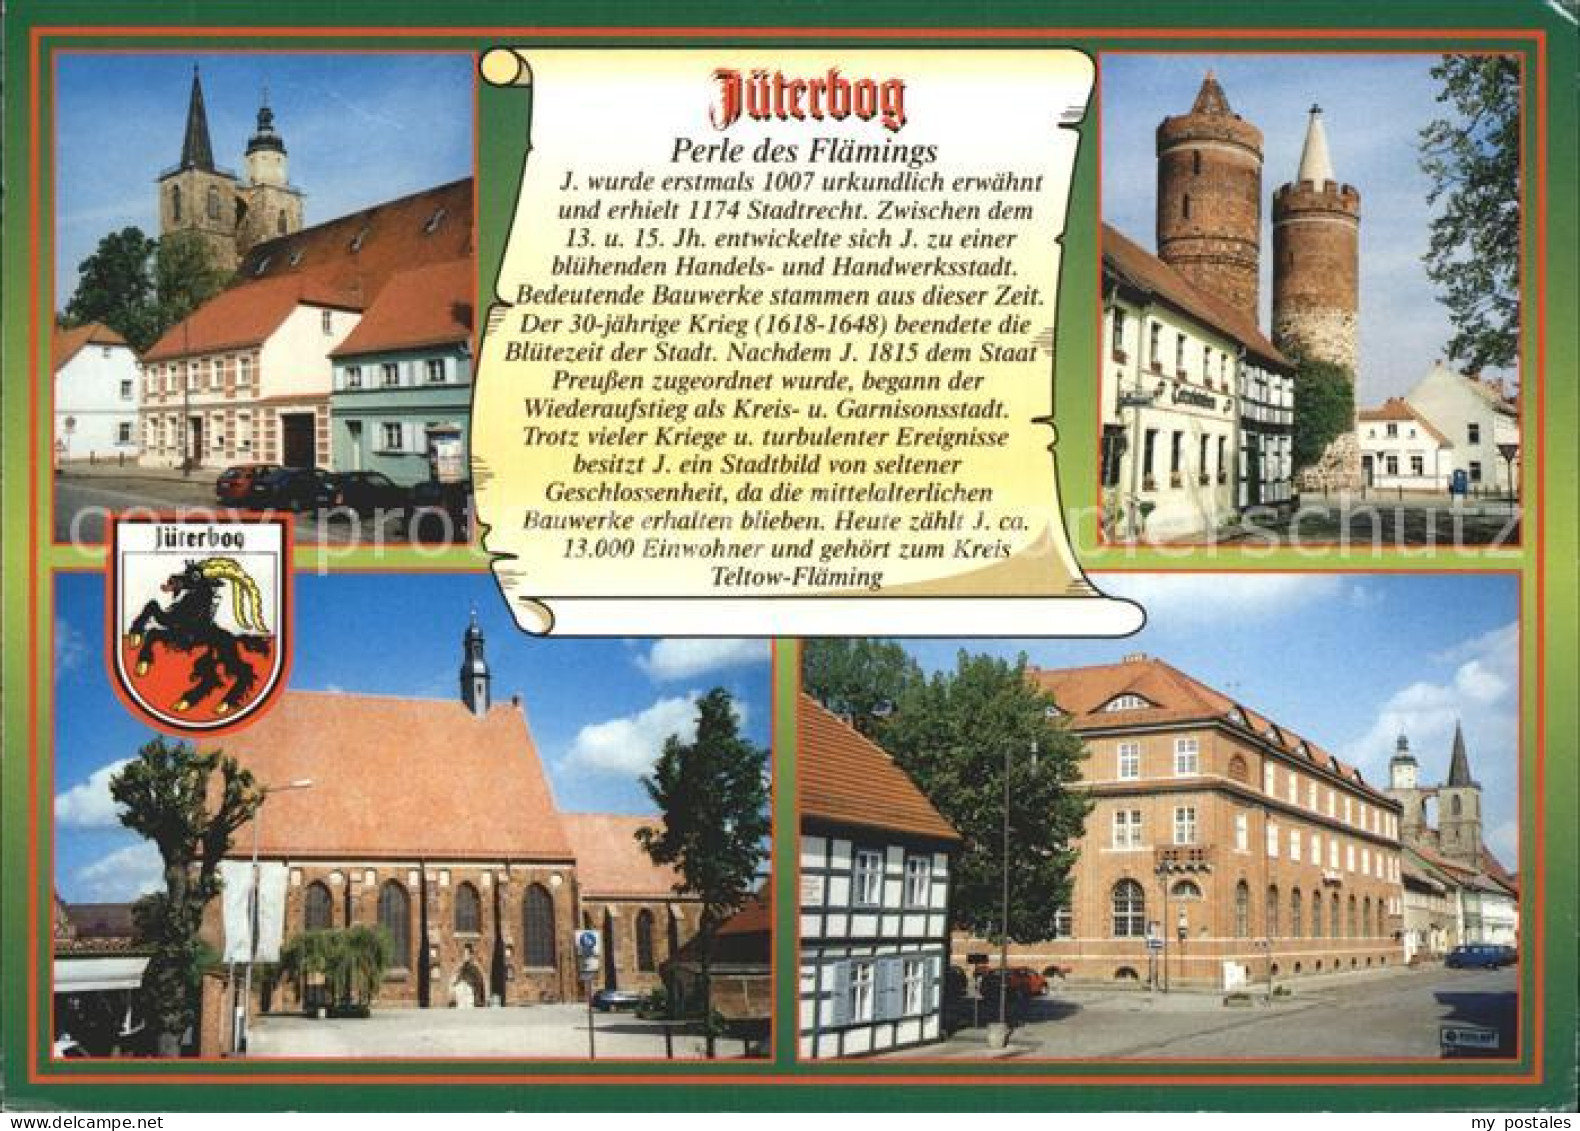 72337185 Jueterbog Perle Des Flaemings Geschichte Kirche Tuerme Moenchenkloster  - Jueterbog